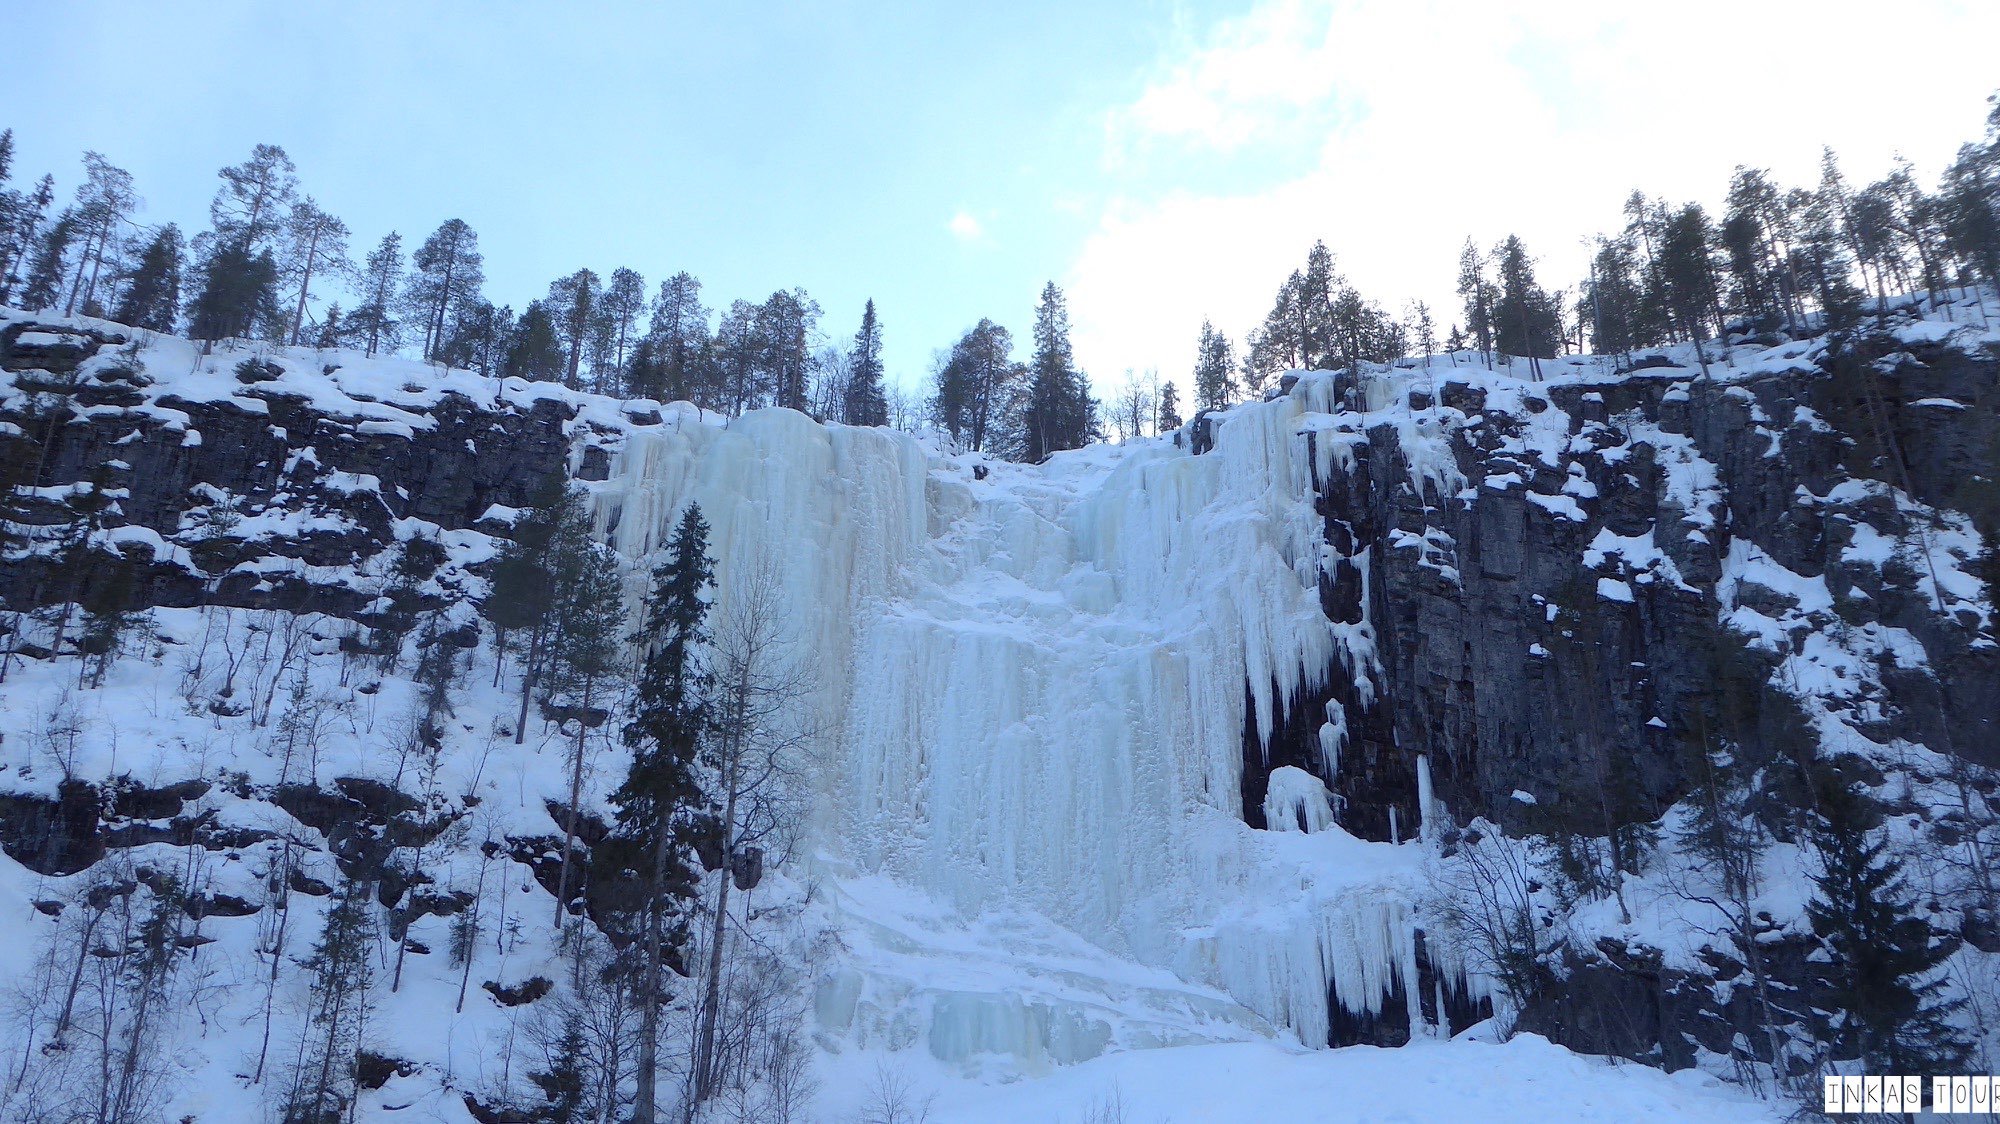 Korouma National Park Frozen Waterfalls Finland Vacation Inkas Tour Photography Salad around the World Travelblog